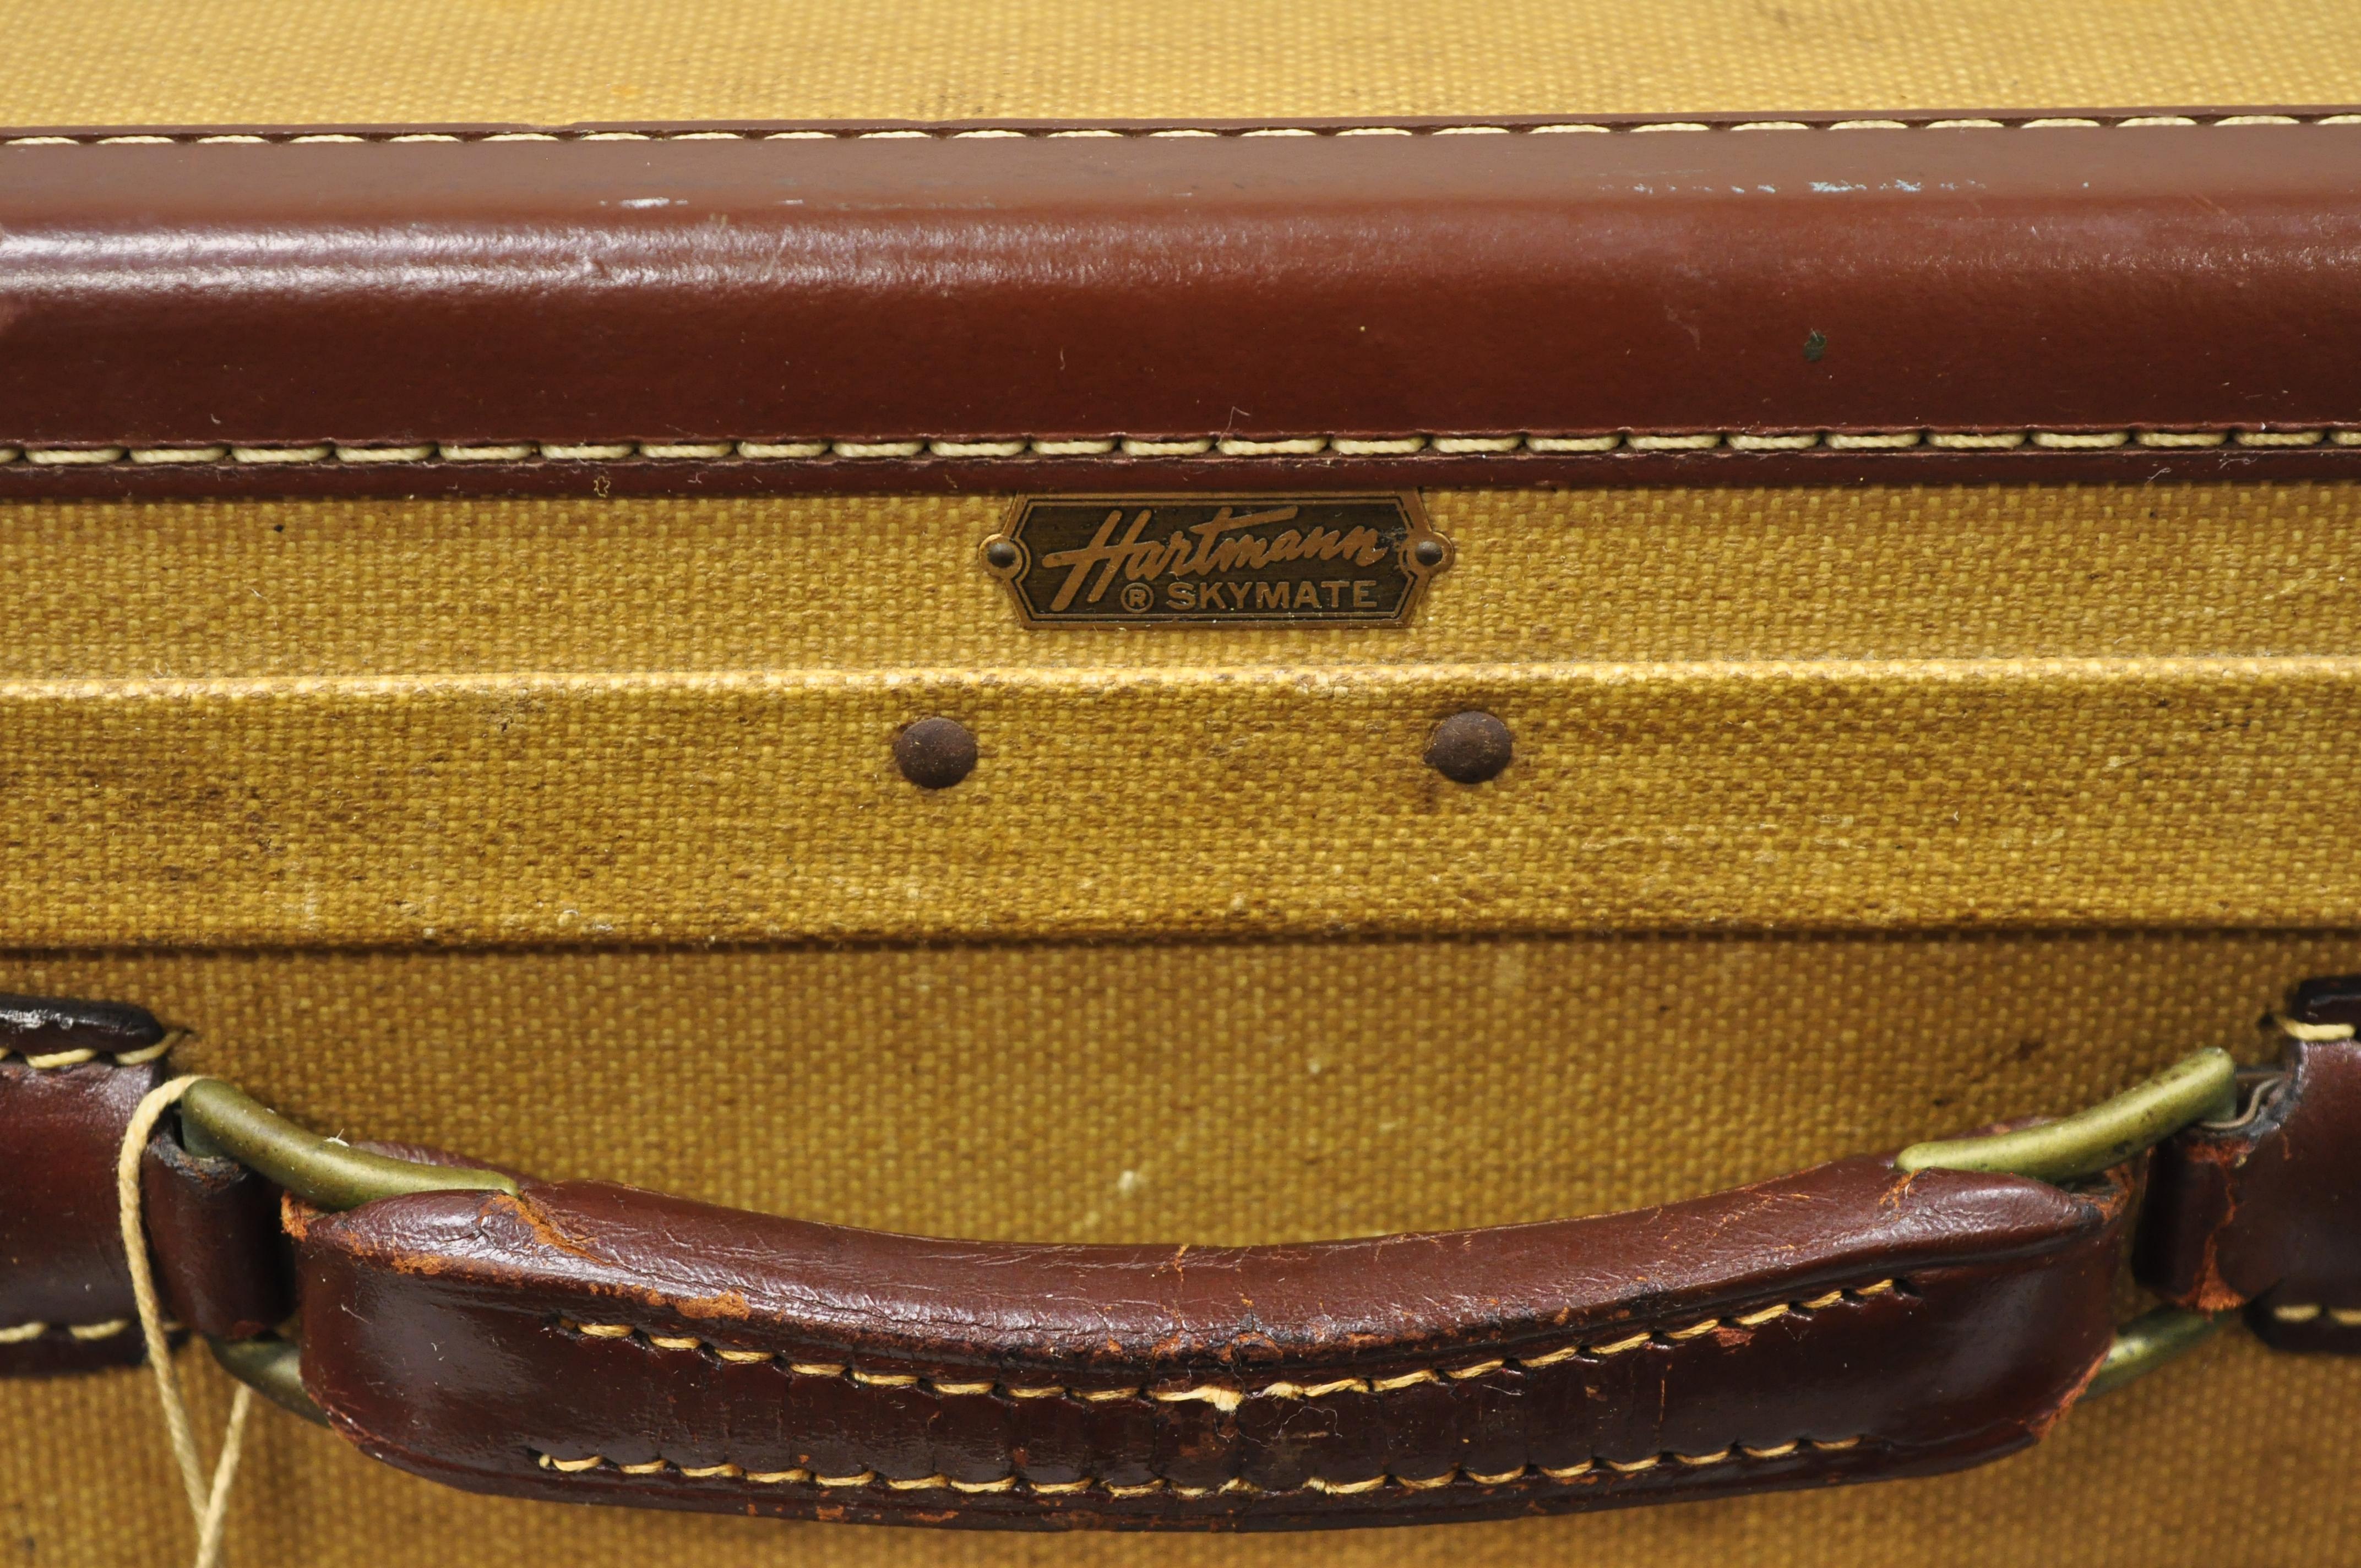 North American Vintage Hartmann Tourobe Gibraltarized Hard Luggage Suitcase Trunk, 3 Piece Set